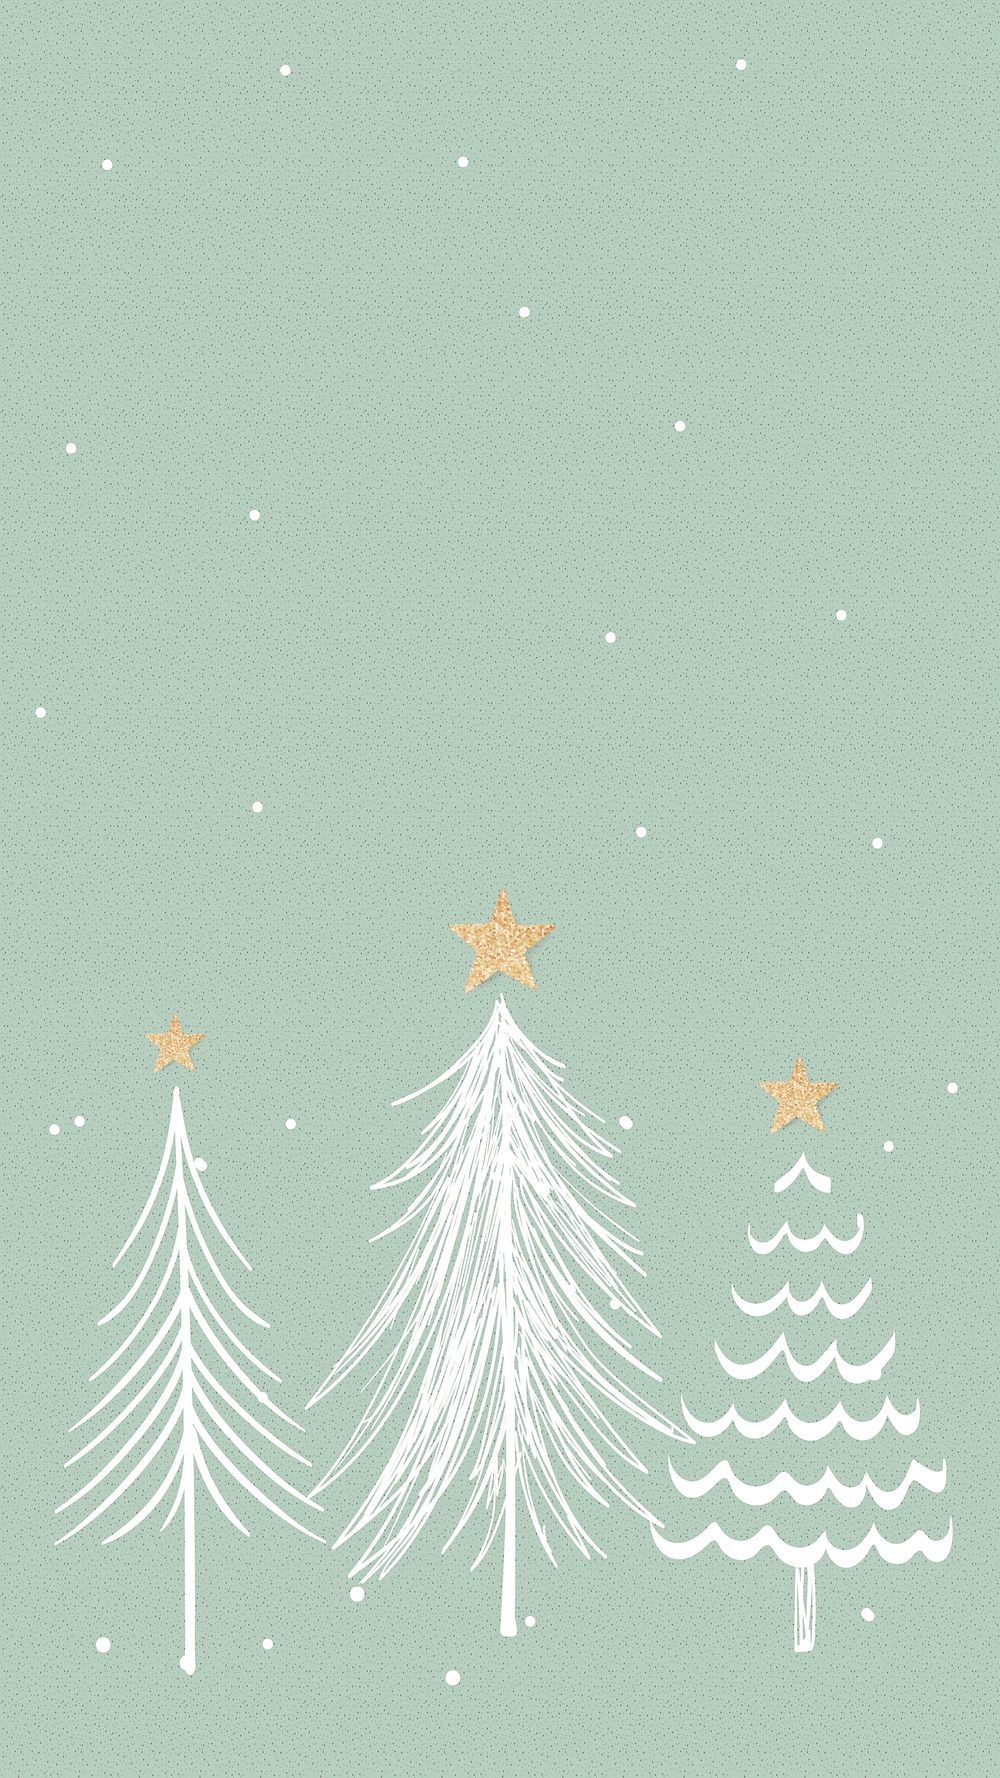 Aesthetic Christmas iPhone wallpaper, winter | Premium Vector - rawpixel